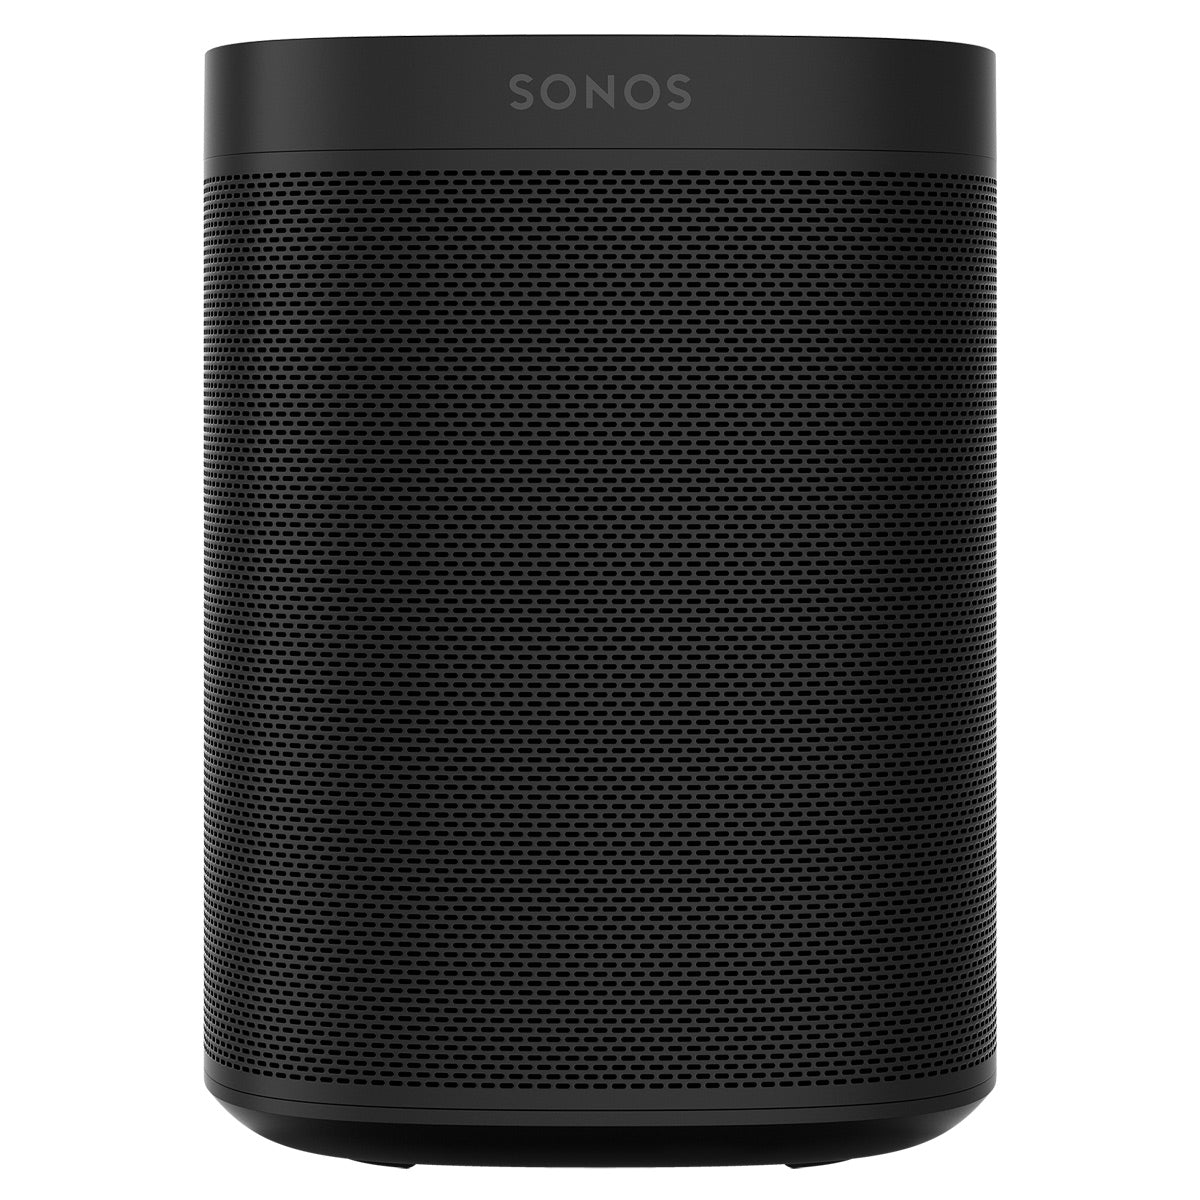 Victrola Stream Carbon Turntable with Pair of Sonos One Gen 2 Smart Speaker (Black)